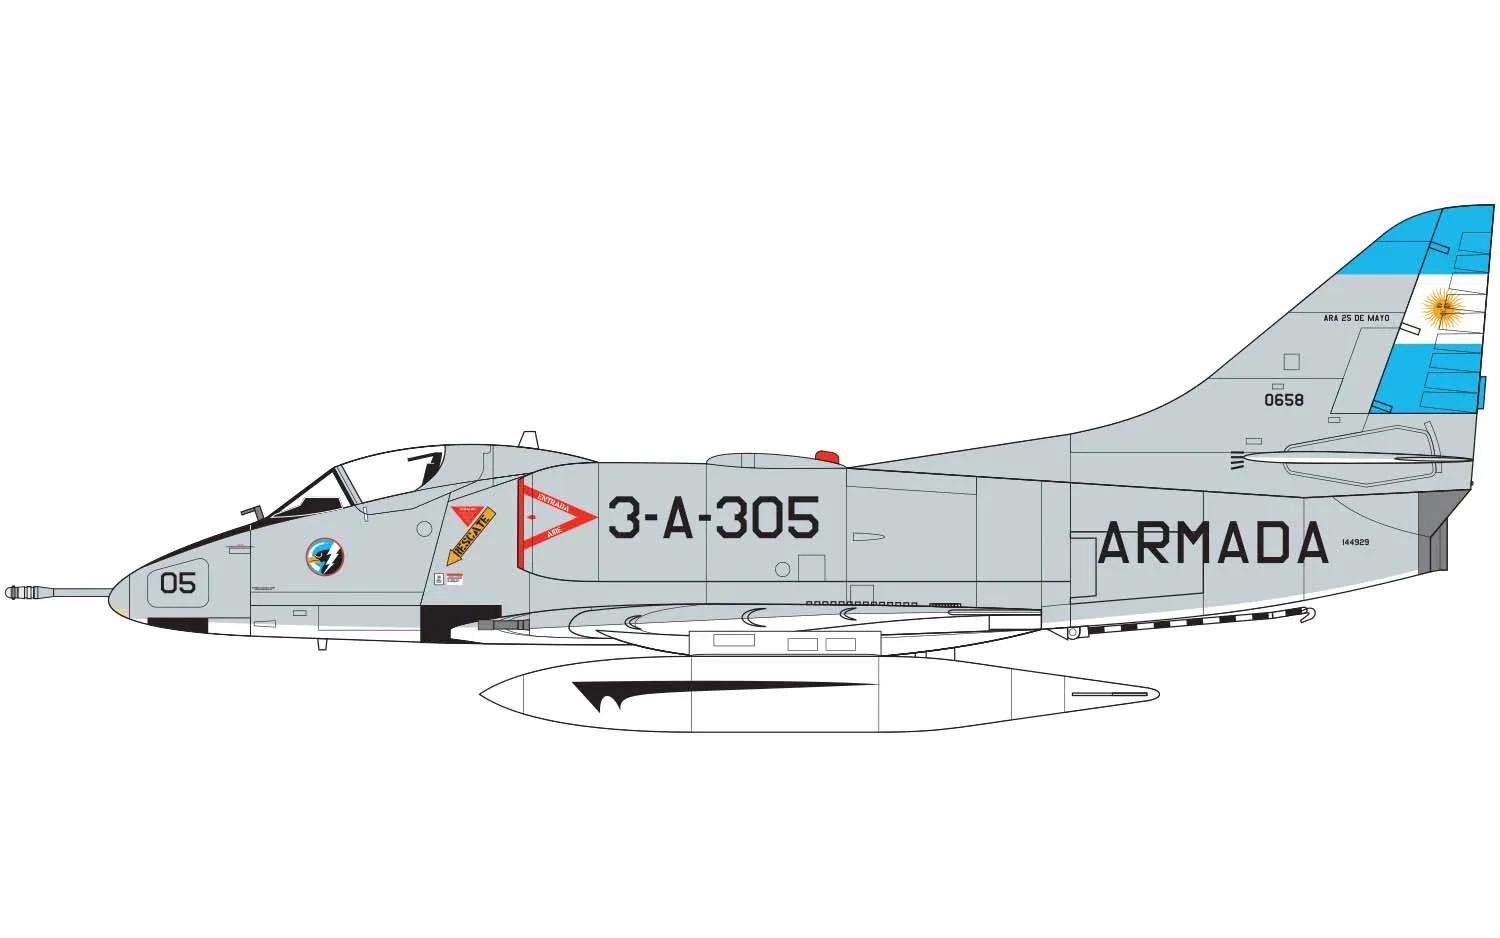 Douglas A-4B/Q Skyhawk